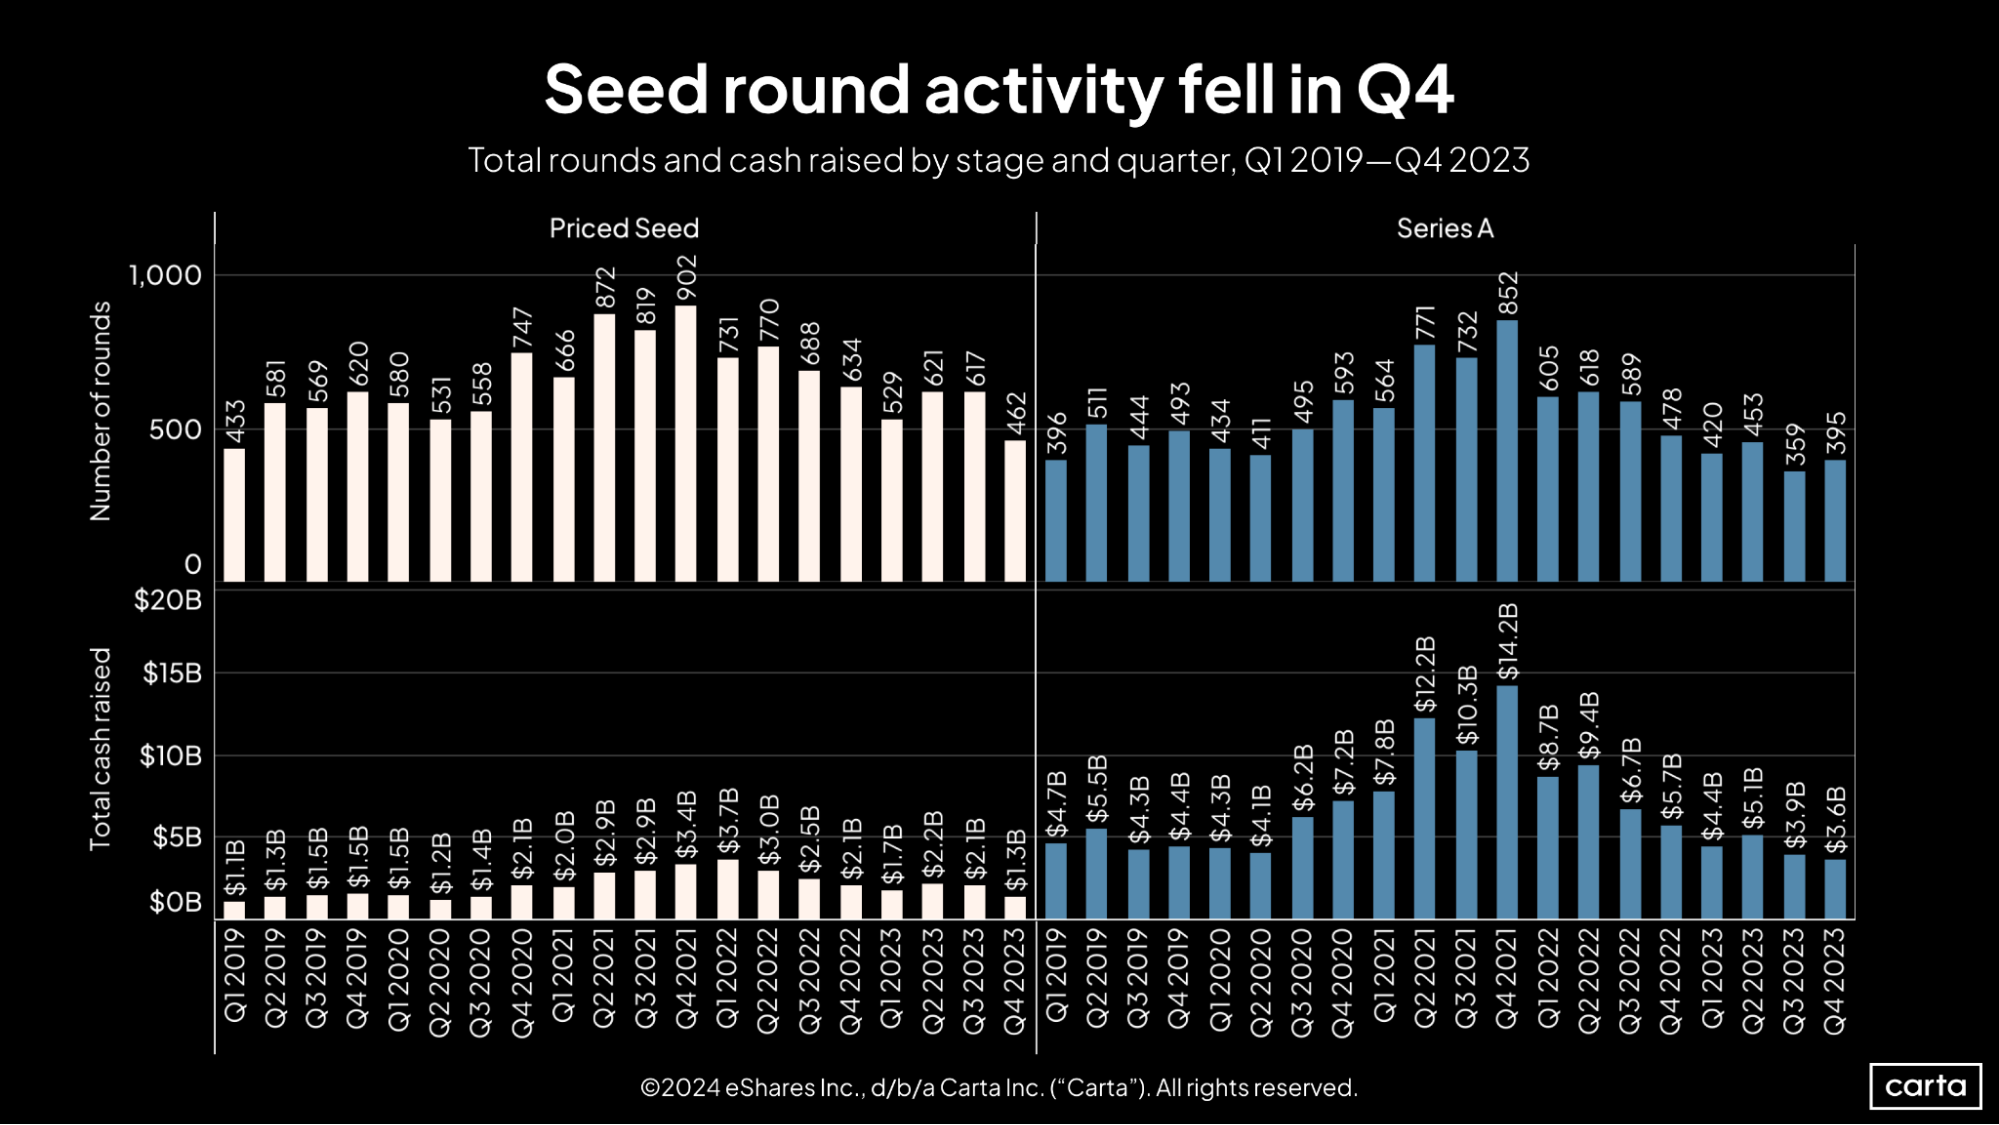 Carta SOPM Q4 2023 Seed round activity fell in Q4